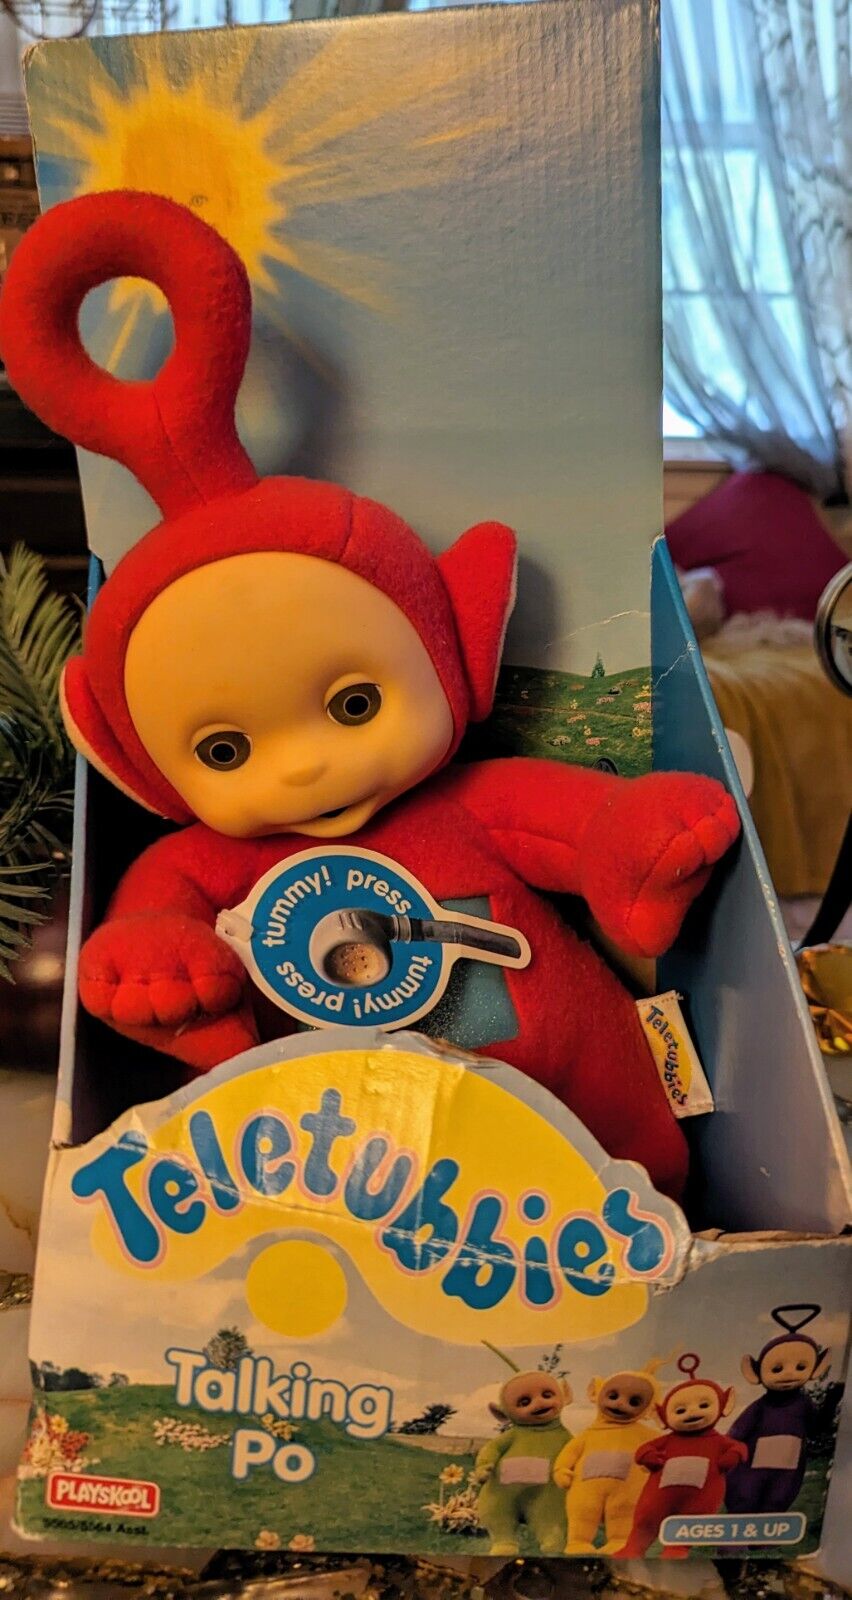 1998 Playskool Teletubbies Talking Po Doll In Original Box Works Recalled Plush 